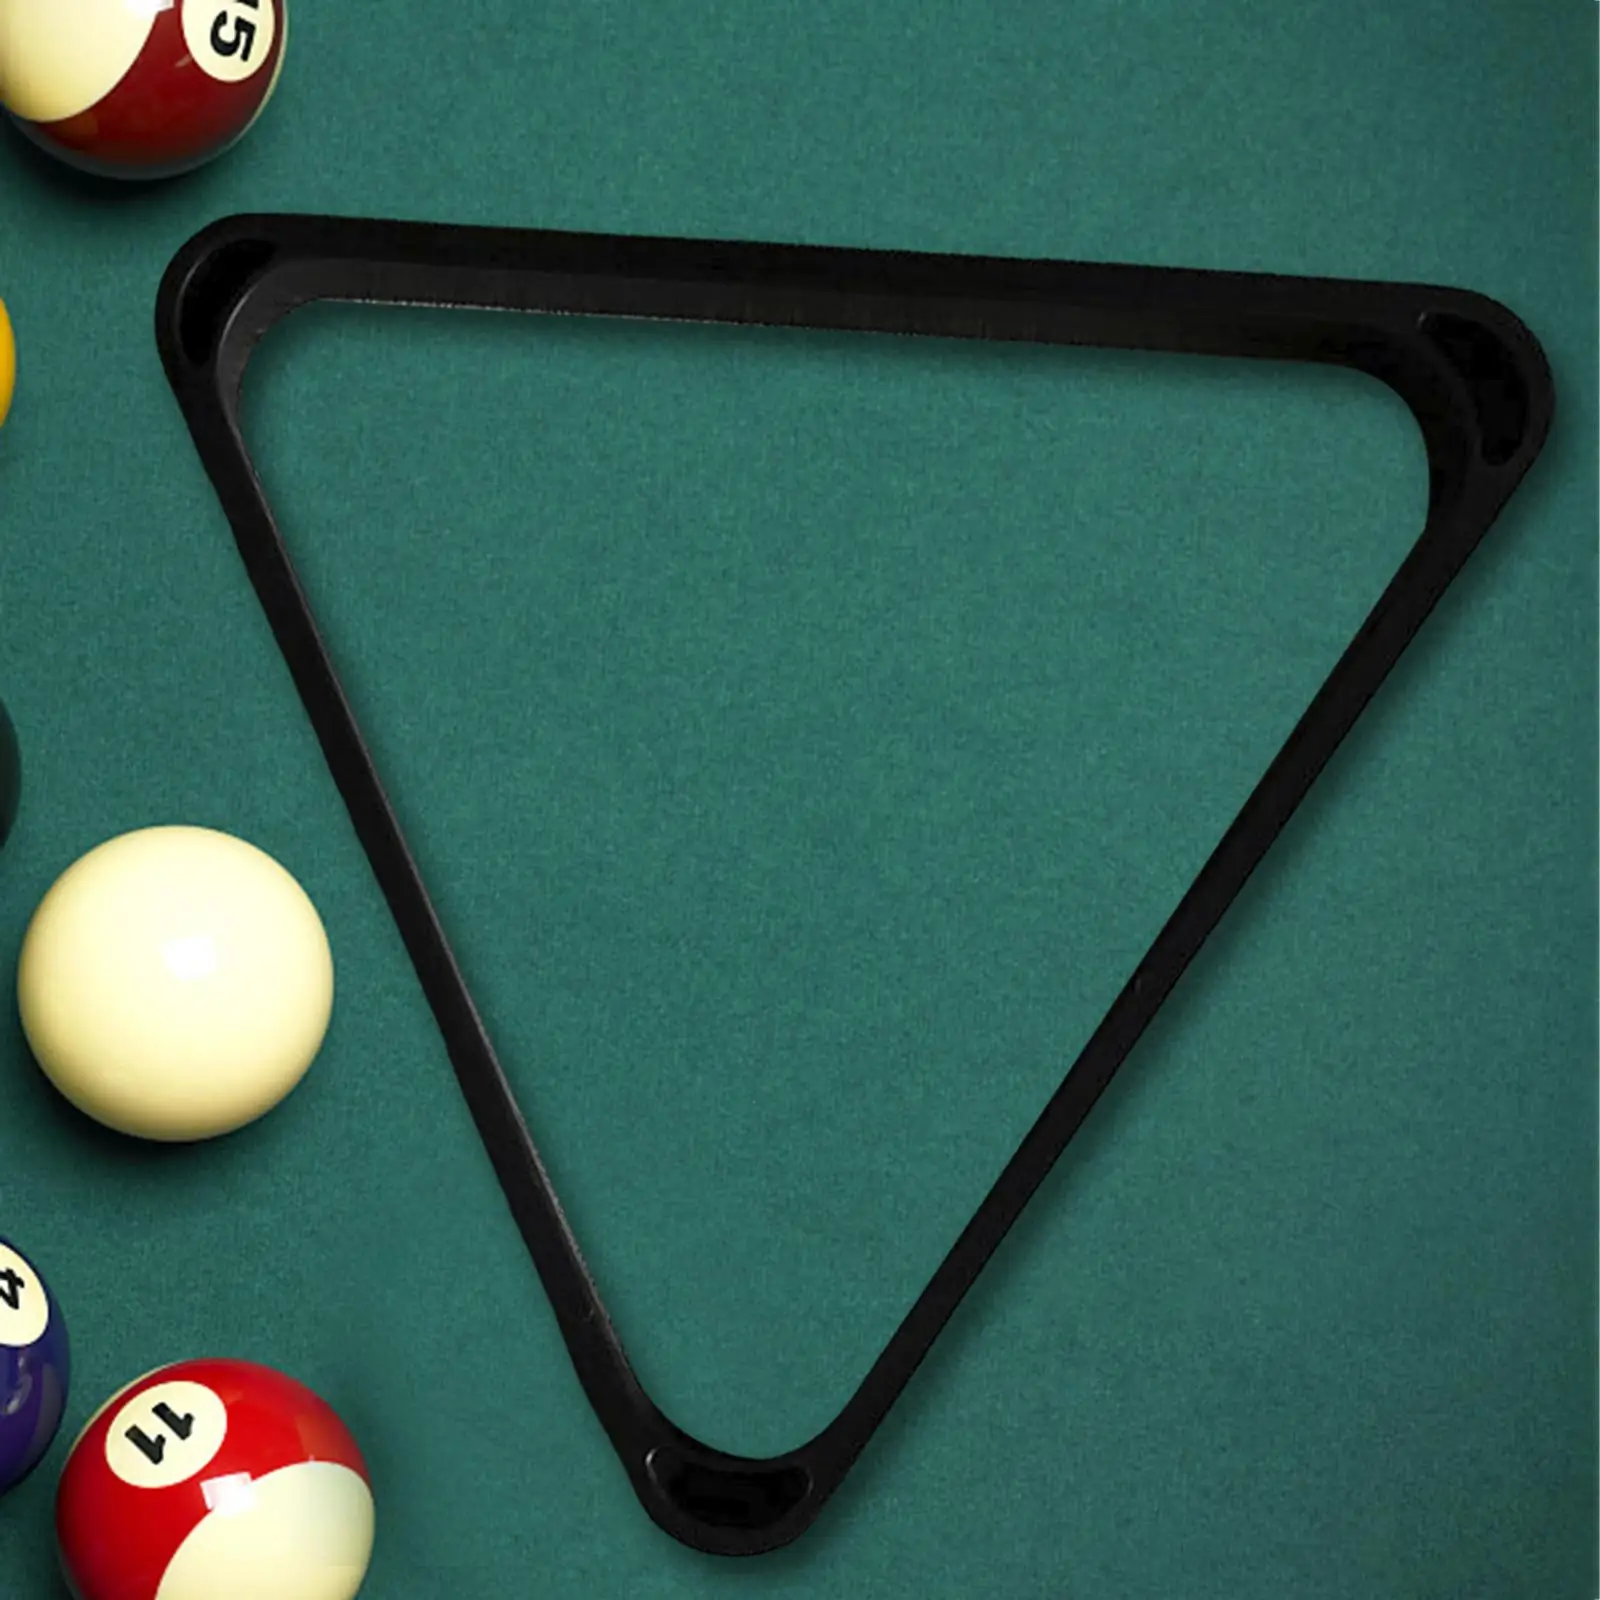 Billiard Triangle Ball Rack Positioning Rack Pool Cue Supplies Pool Rack Pool Table for Club Pool Halls 2-1/ 4inch Indoor Game